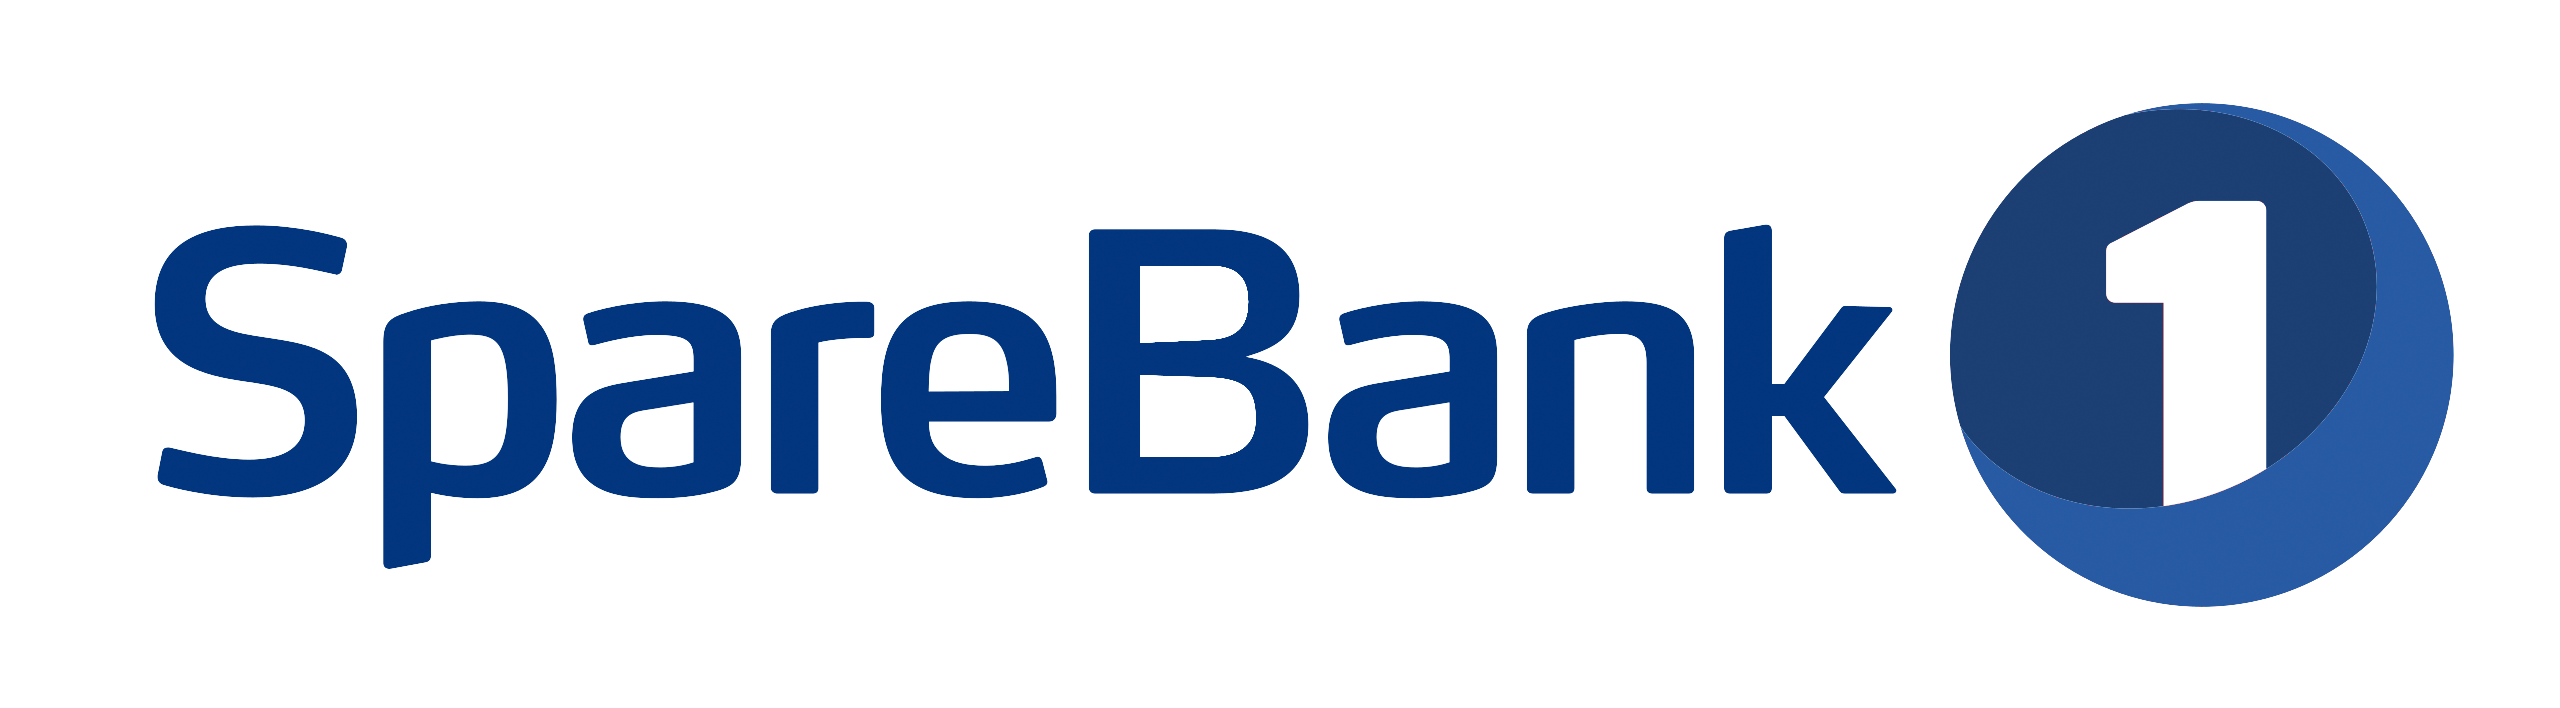 Sparebank 1 logo